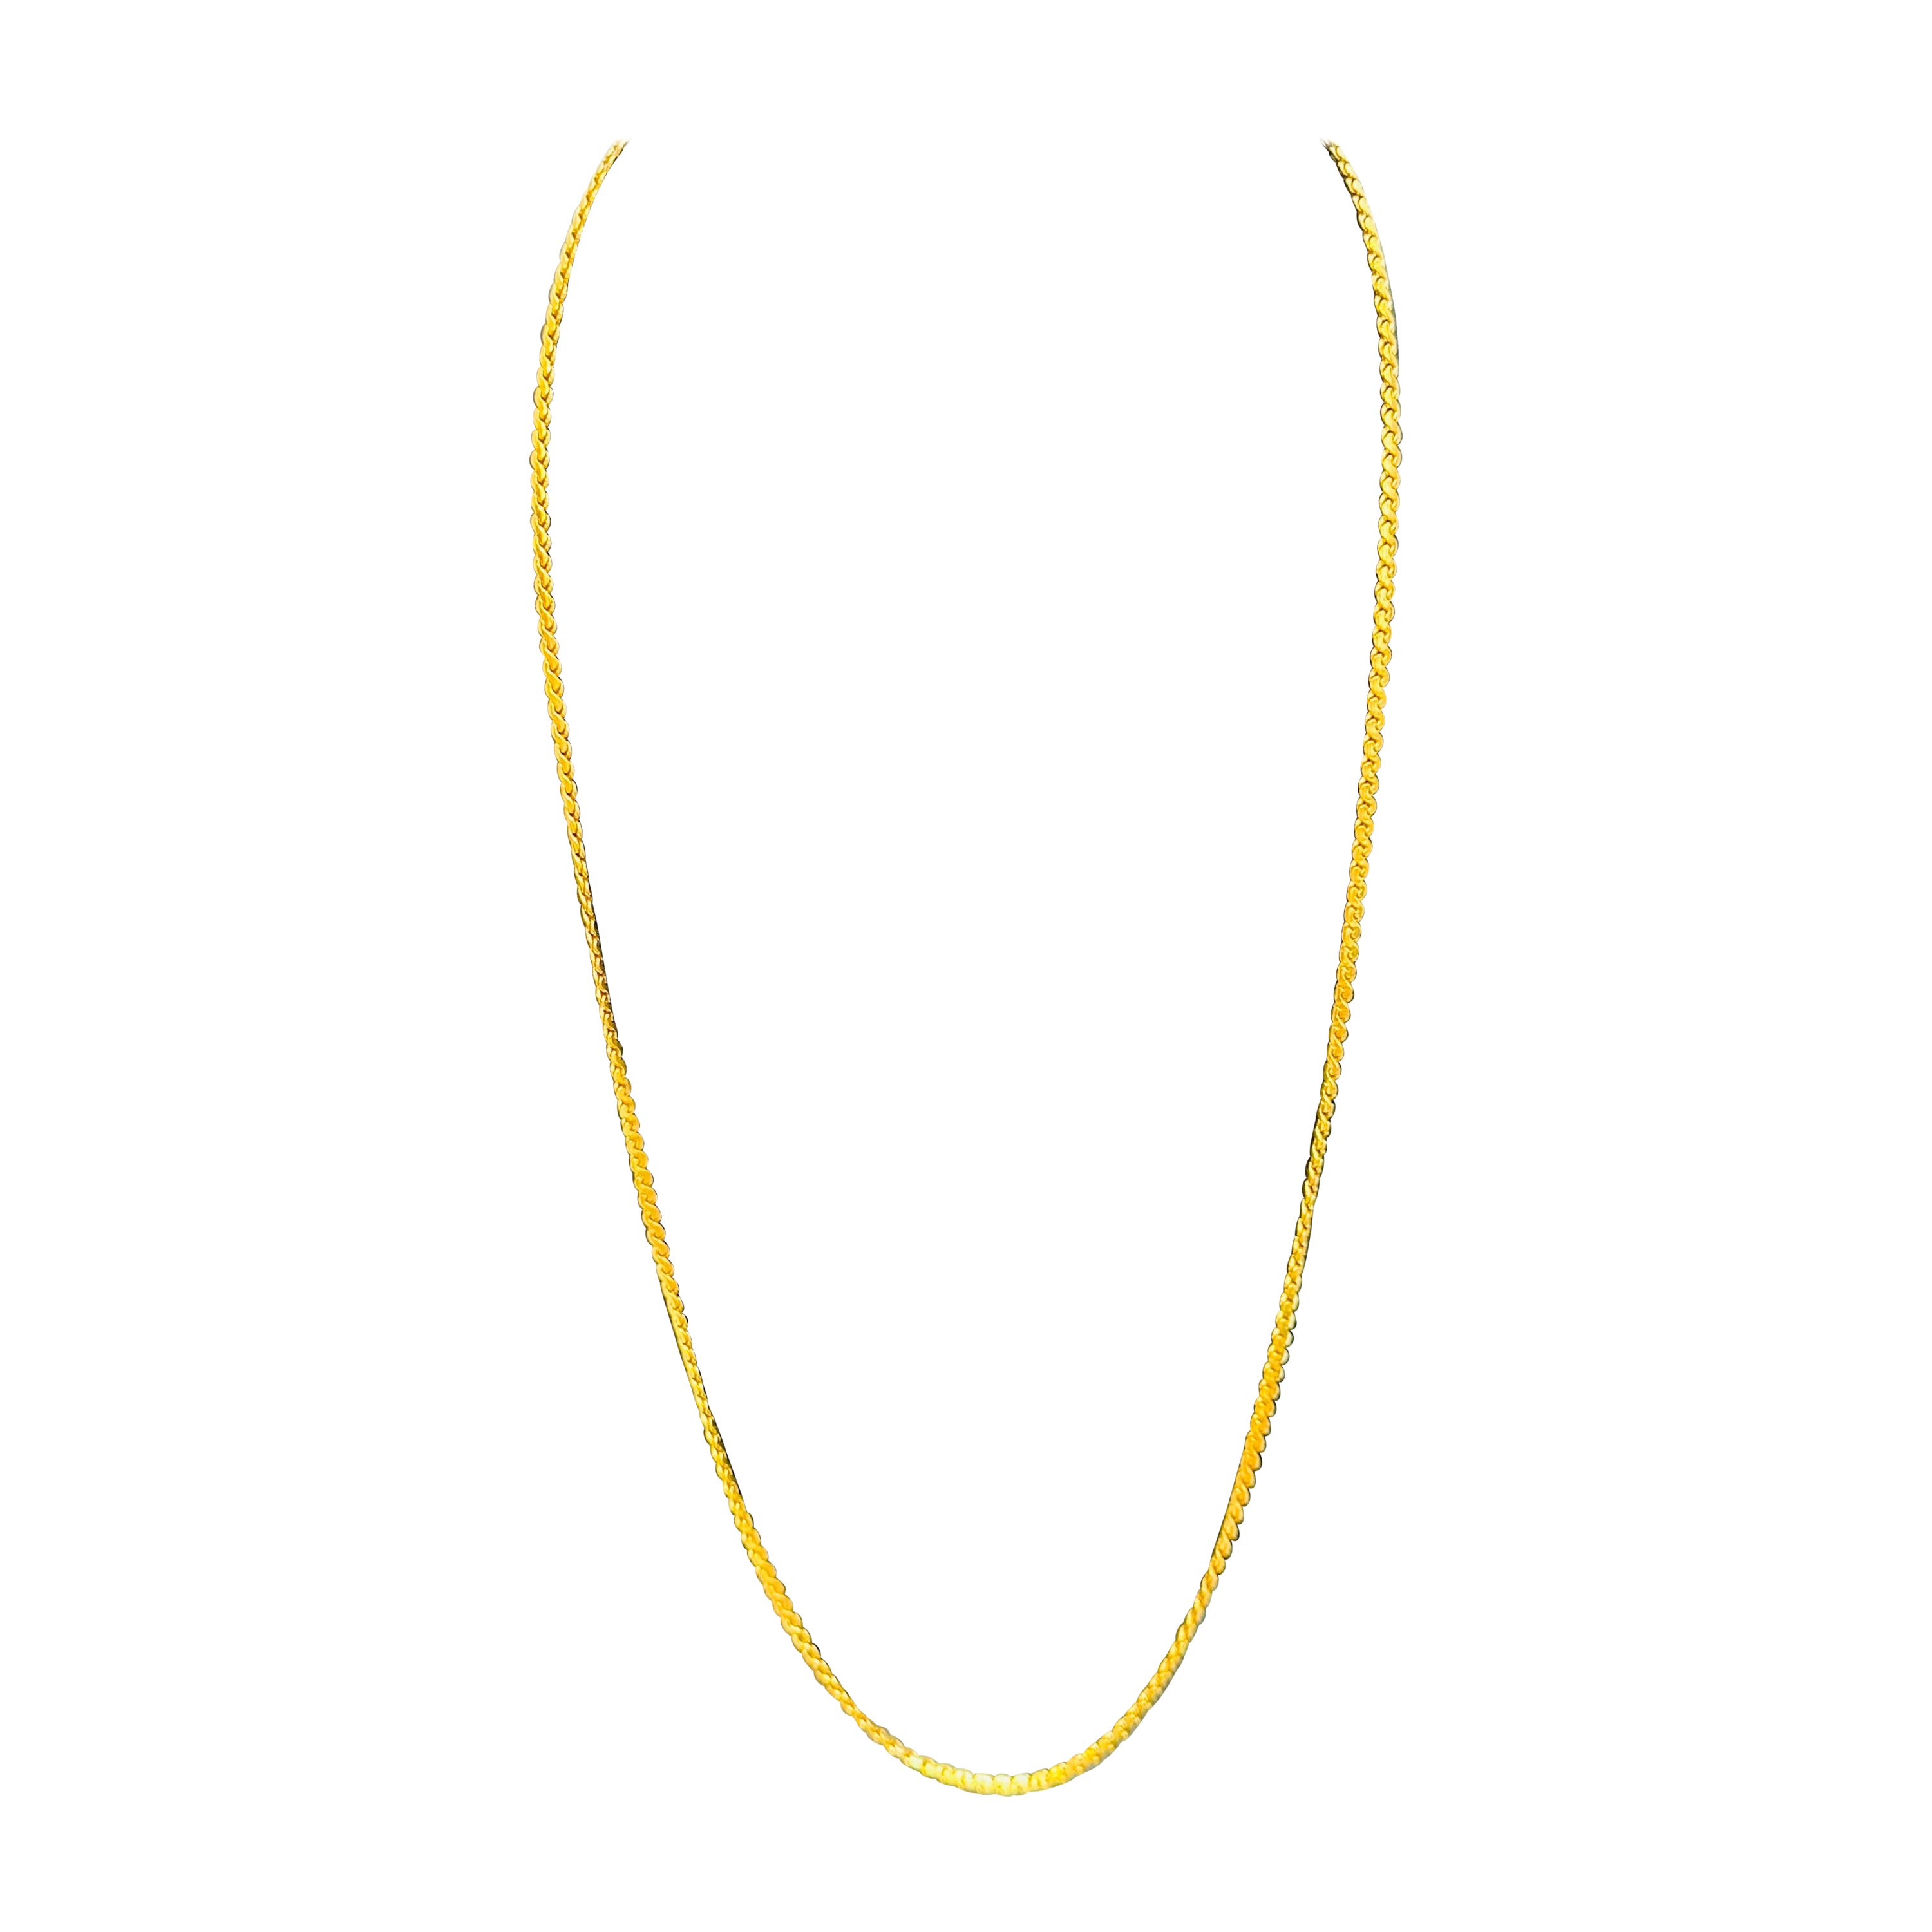 Vintage 18 Karat Yellow Gold 9.6 Gm S Link Chain Necklace